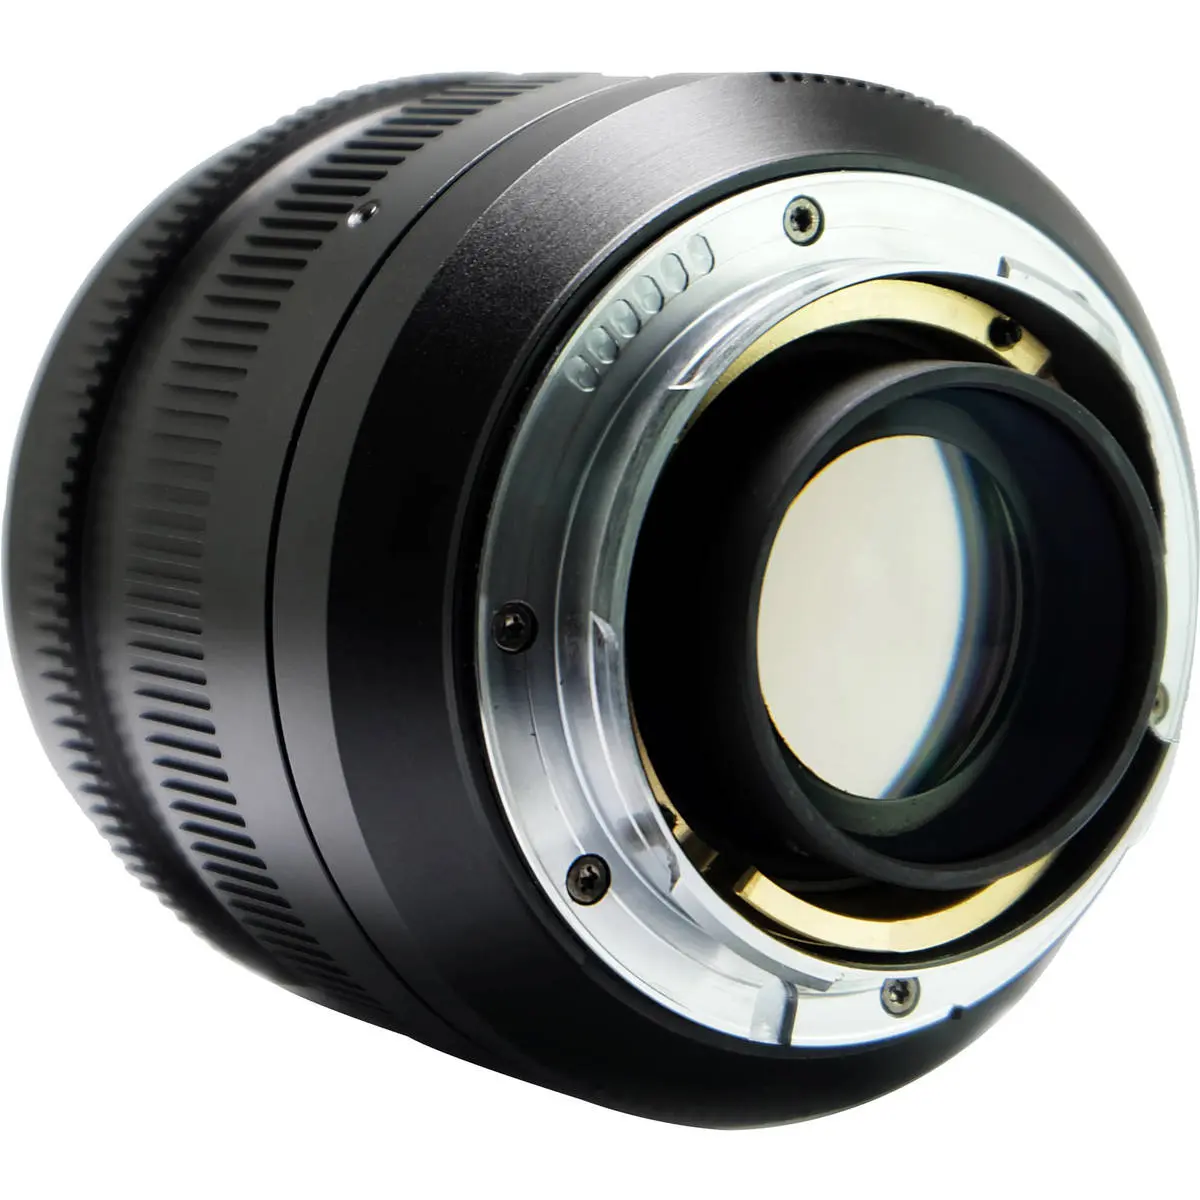 1. 7Artisans 50mm F1.1 (Leica M) Black (A401B) Lens